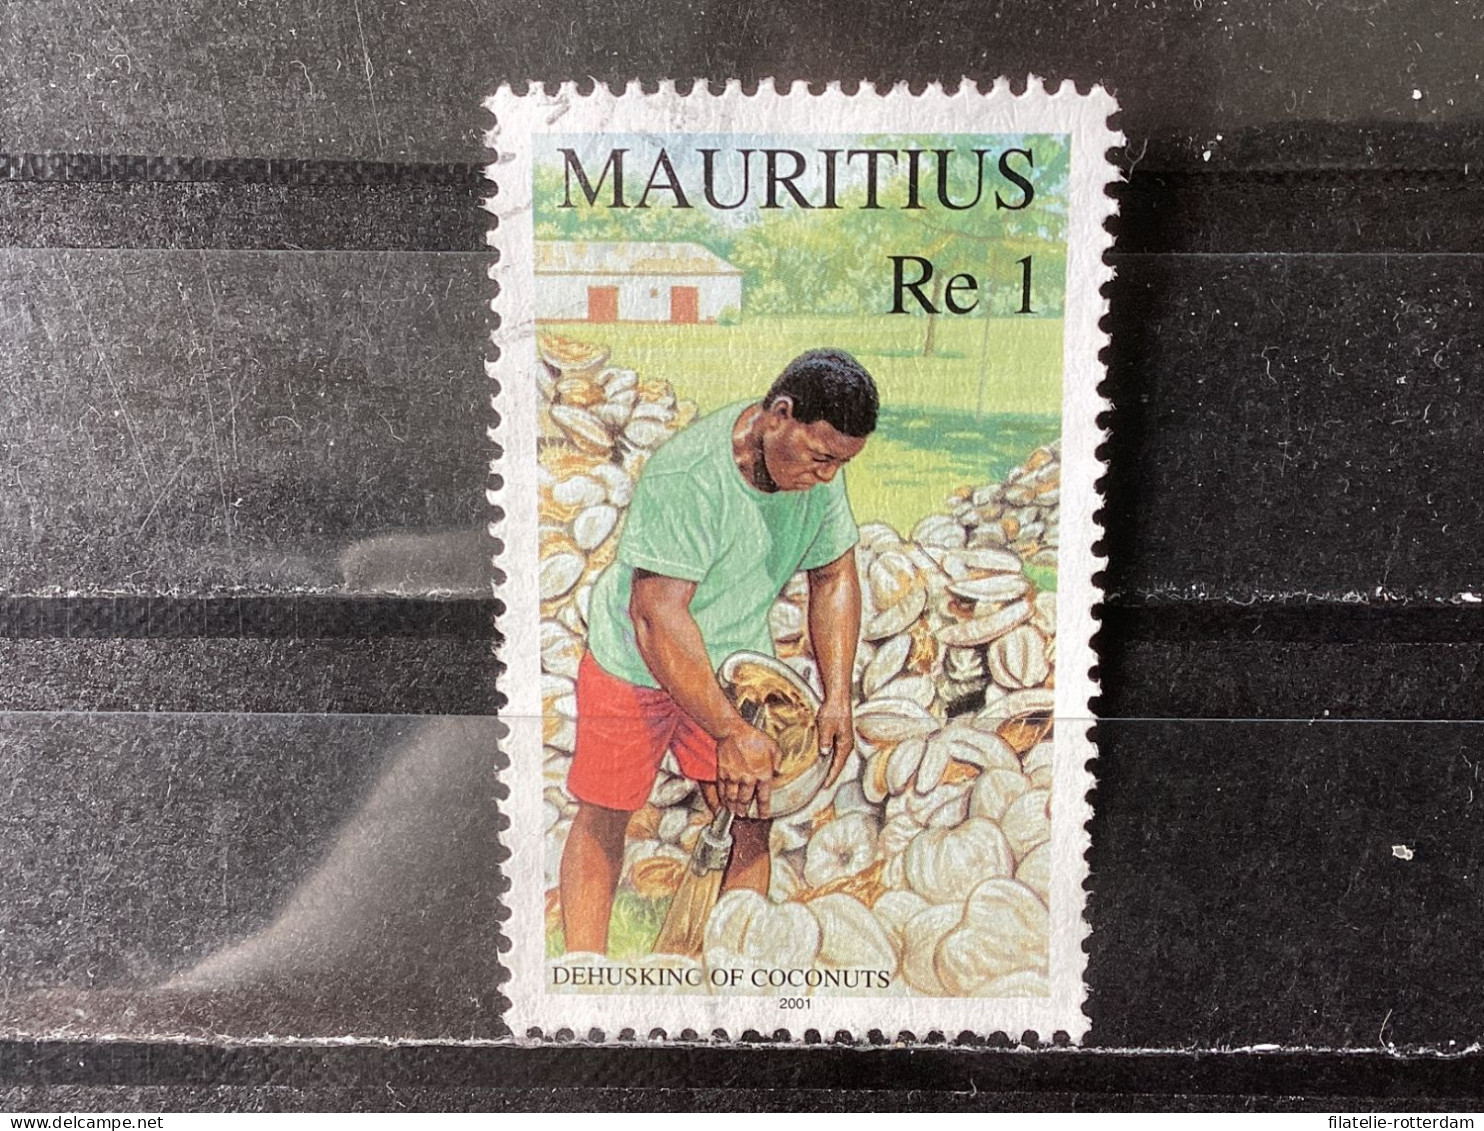 Mauritius - Coconuts (1) 2001 - Maurice (1968-...)